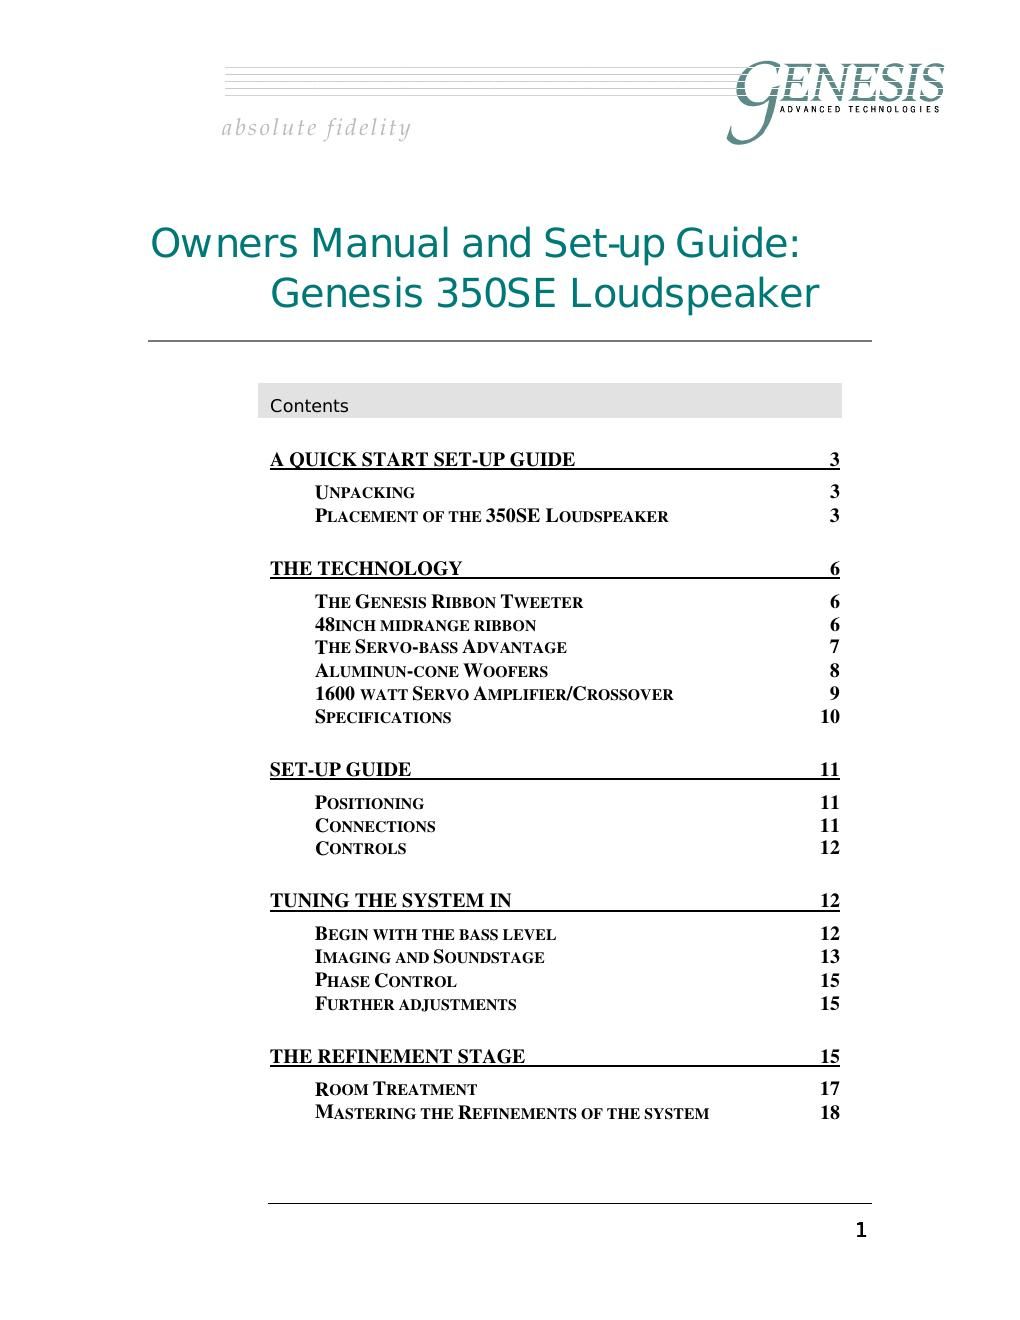 genesis 350 se owners manual